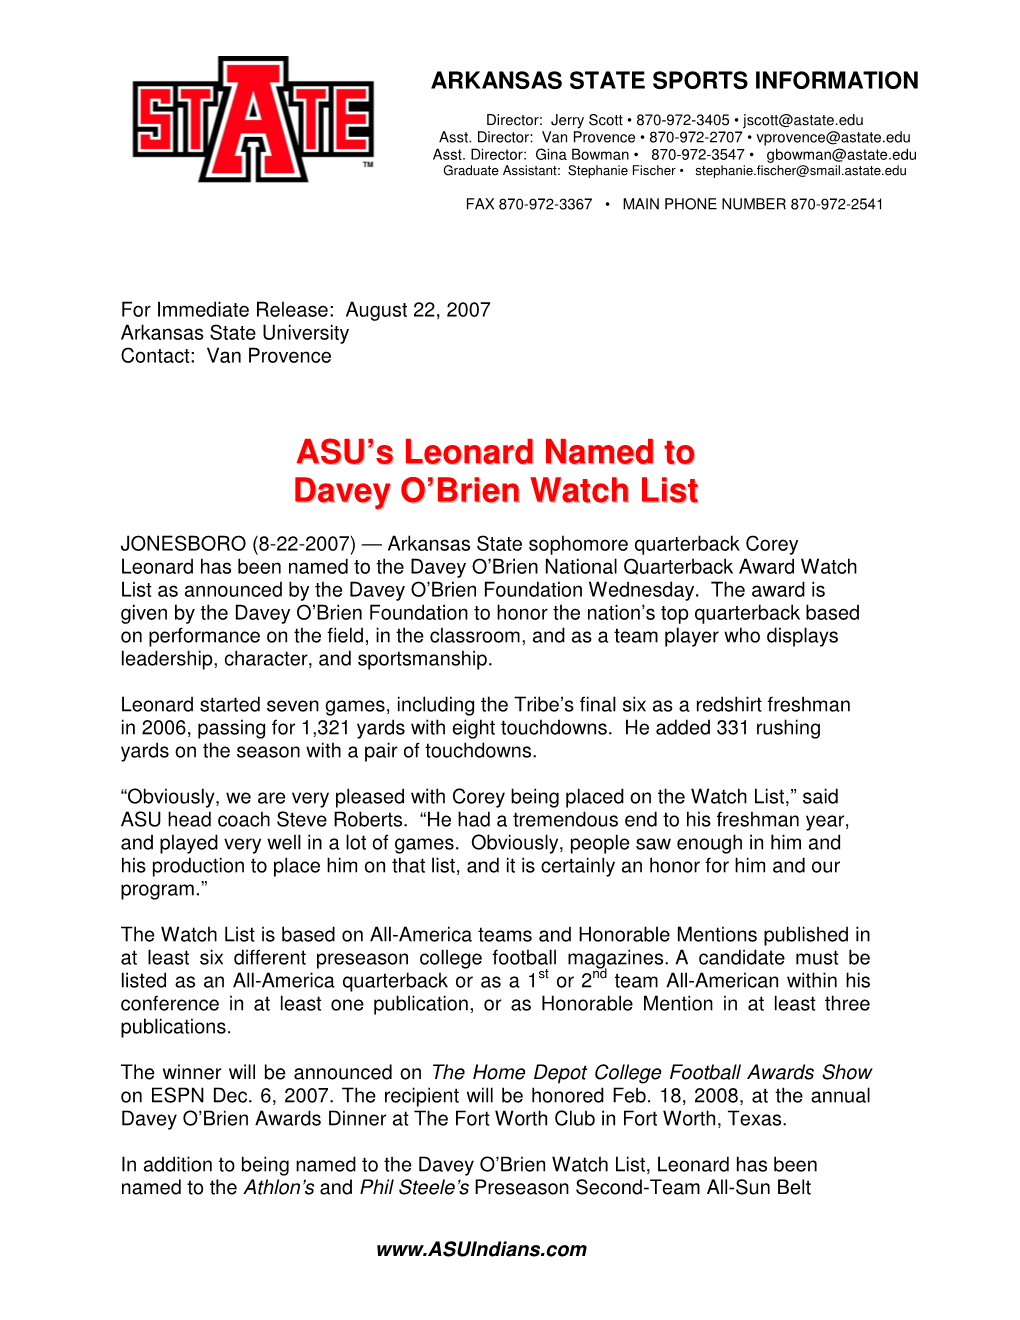 ASU's Leonard Named to Davey O'brien Watch List